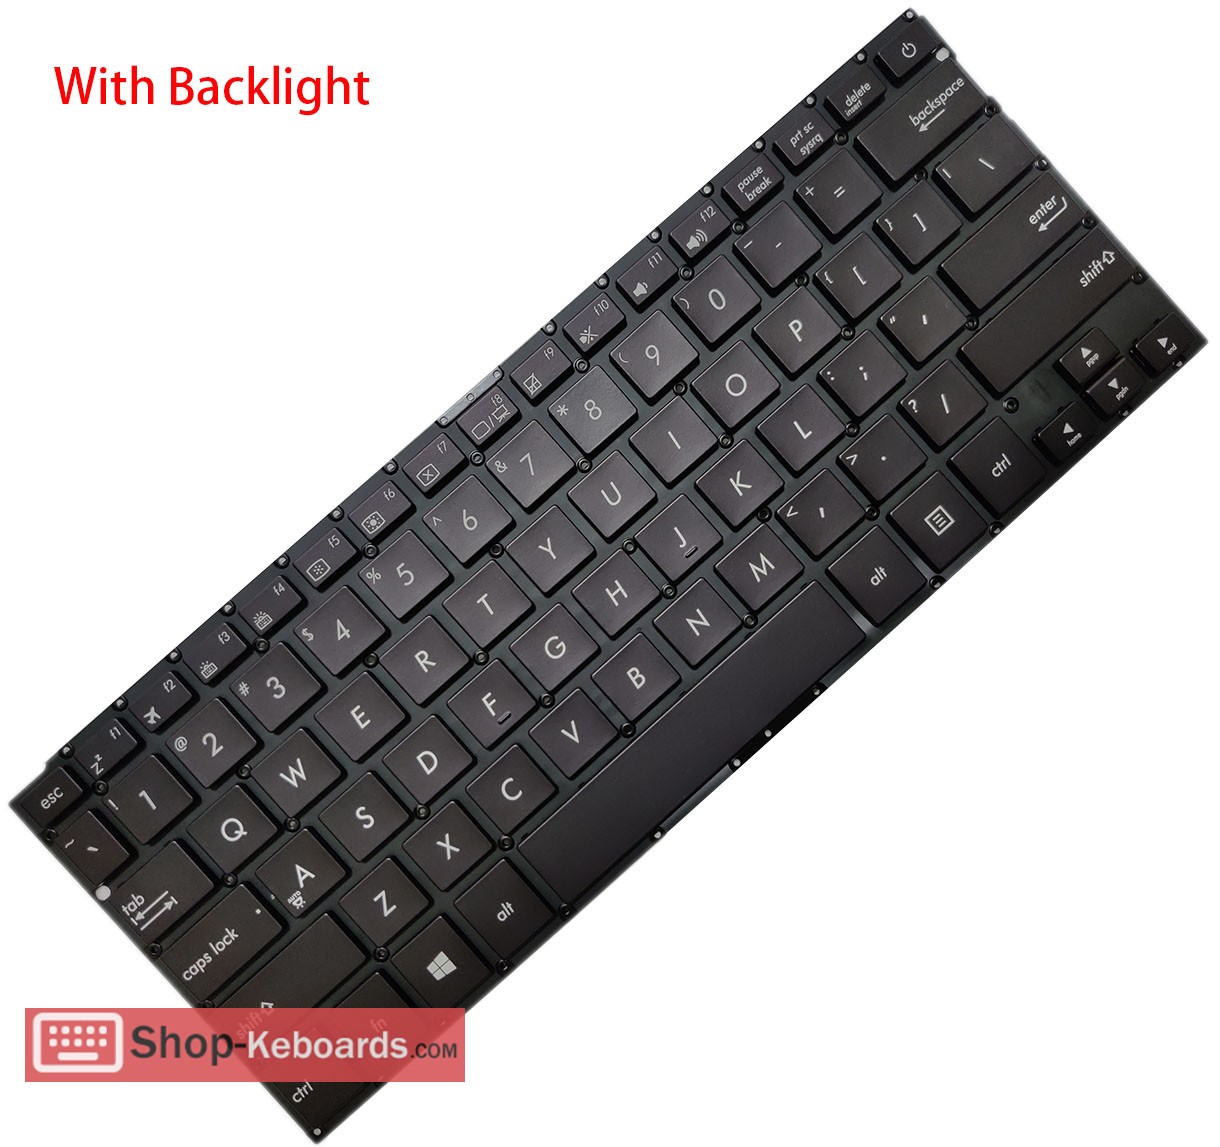 Asus ZENBOOK UX410UQ-GV018T  Keyboard replacement